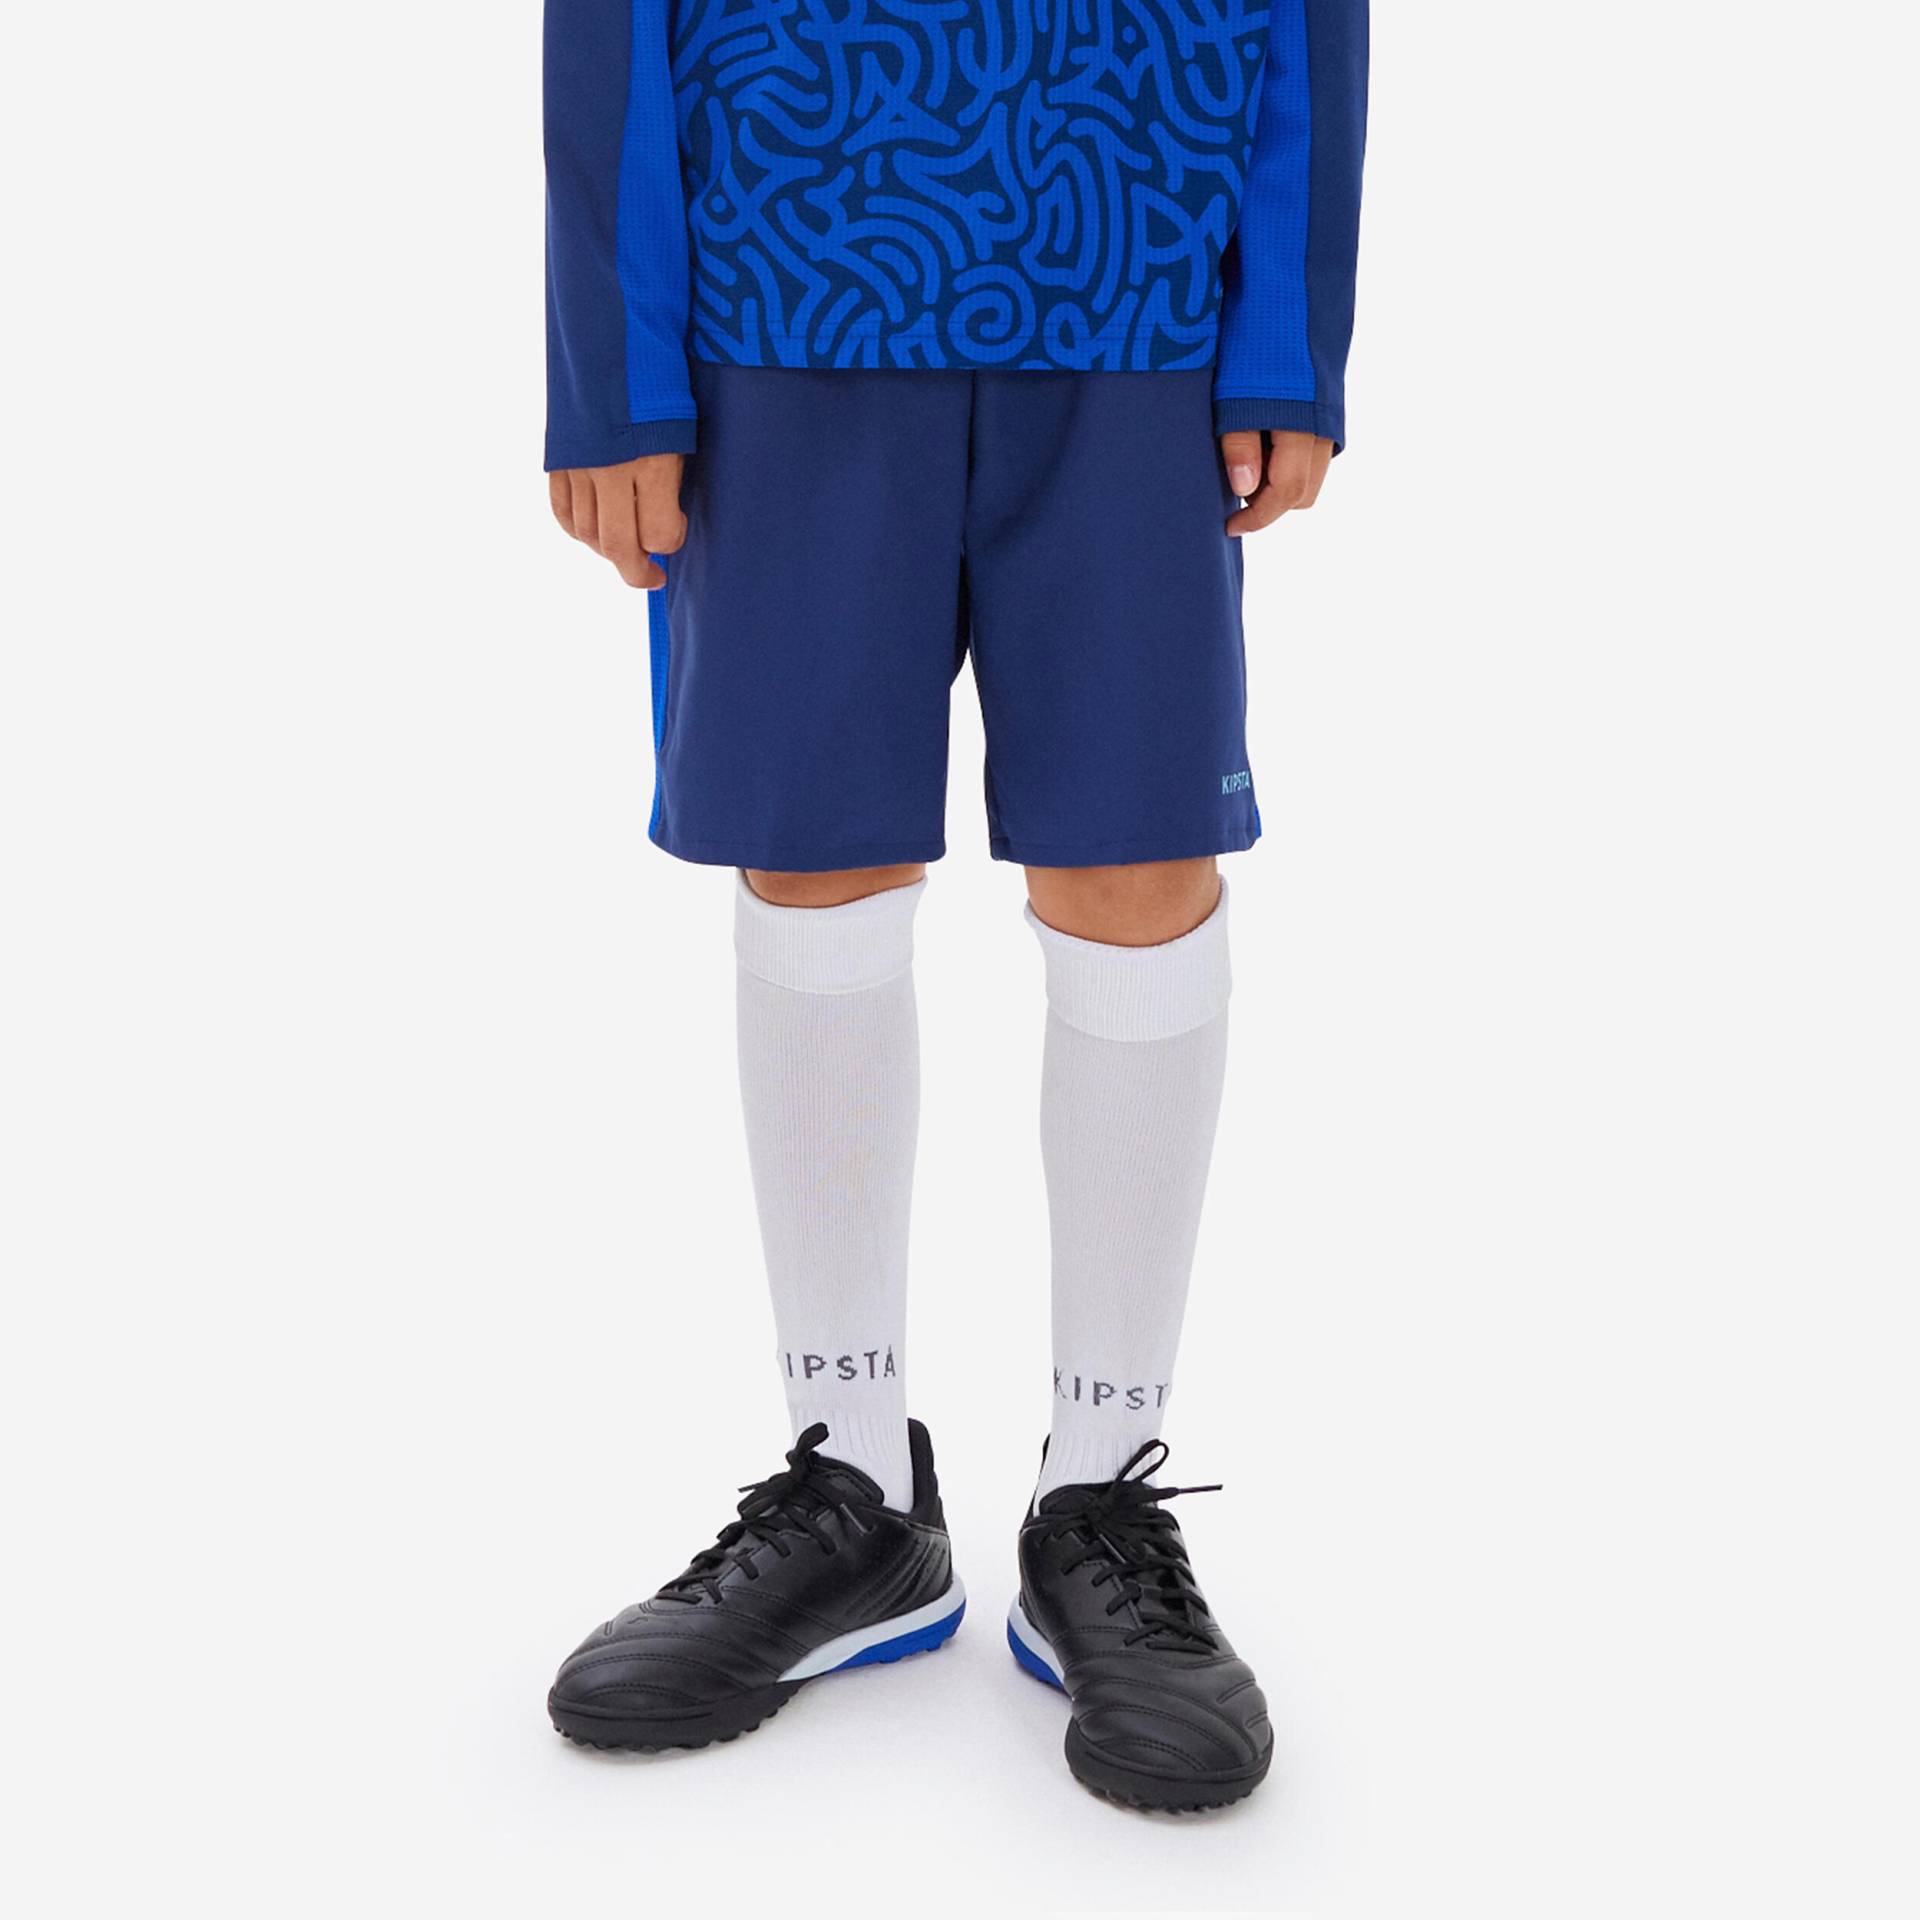 Kinder Fussball Shorts - Viralto Letters marineblau/blau von KIPSTA